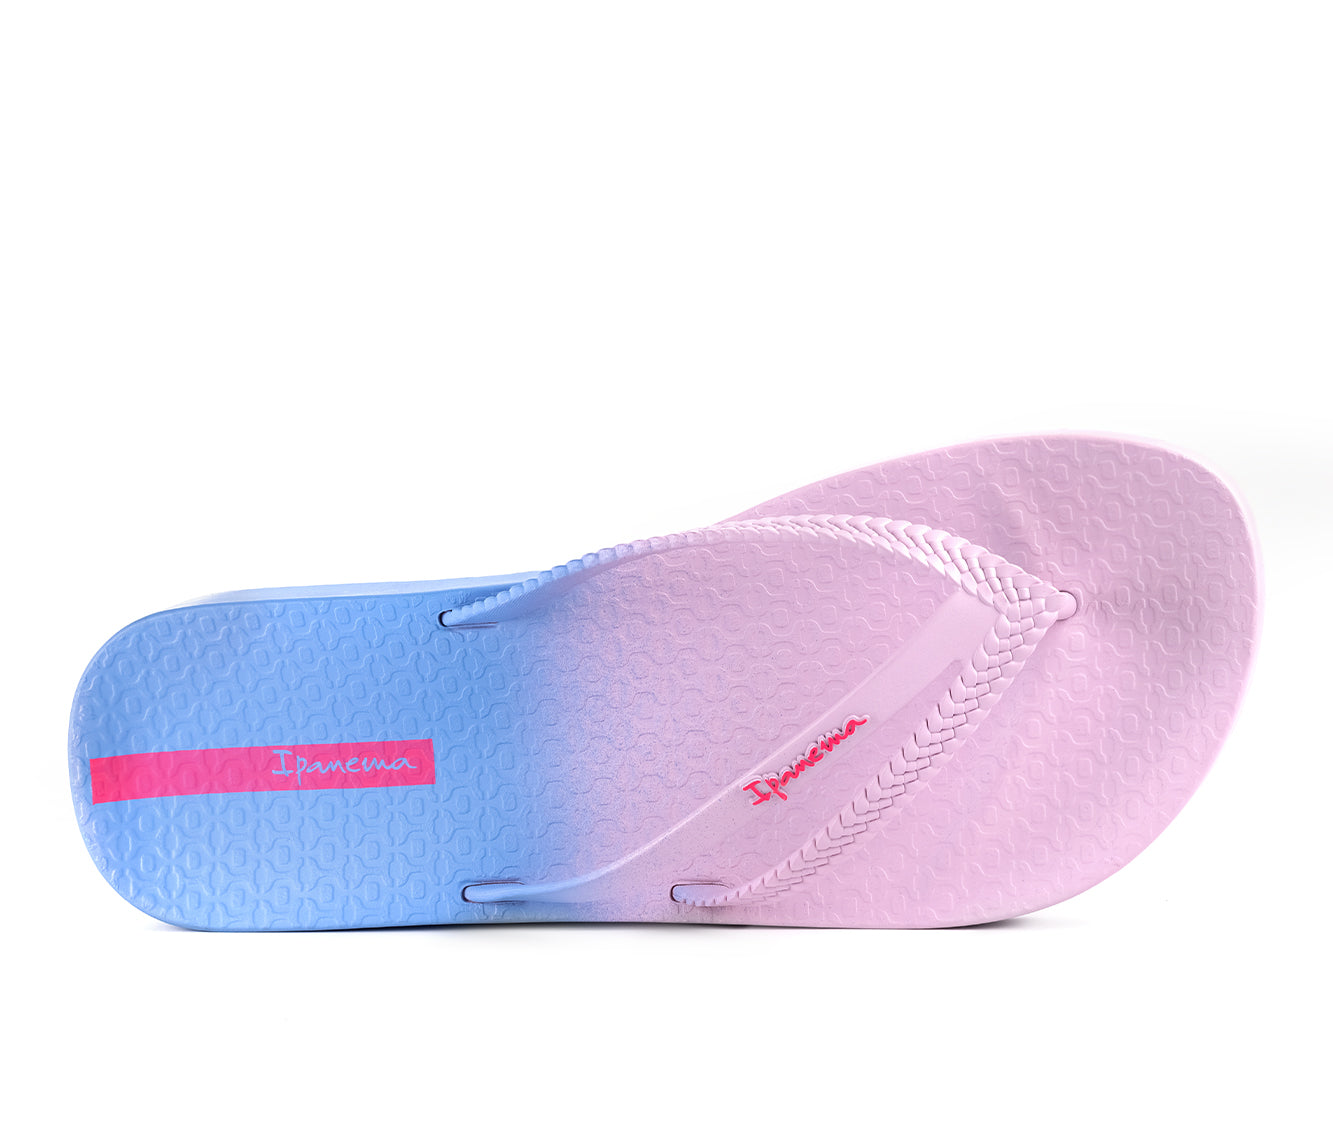 Ipanema Bossa Soft Chic  Pink/Blue Top View